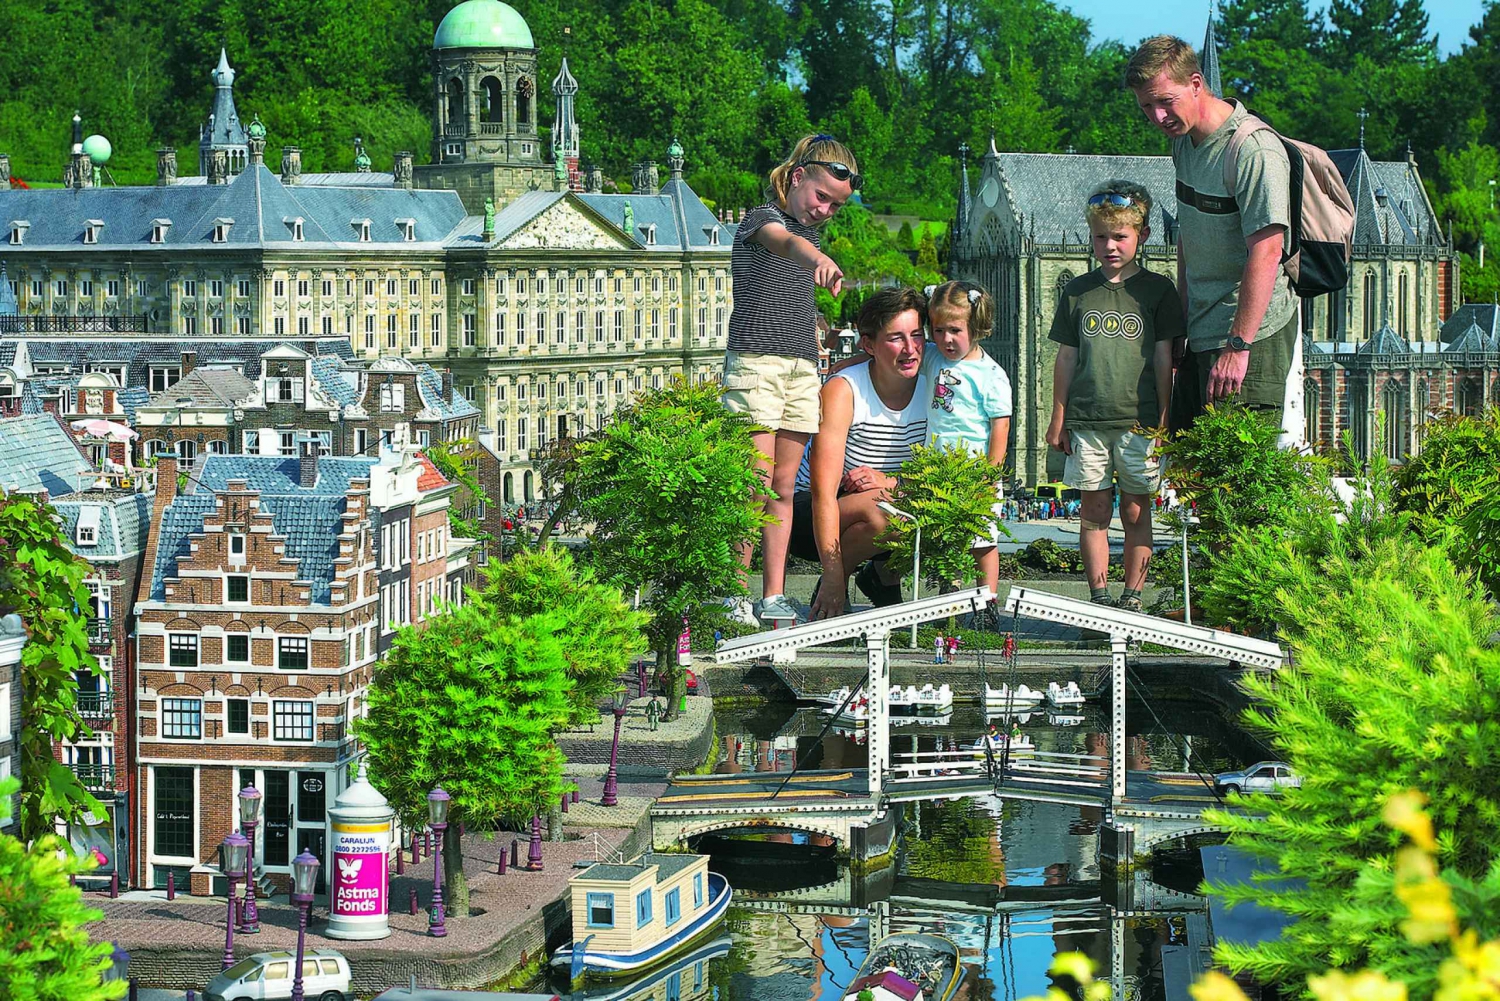 Small Group Tour: Kinderdijk, The Hague & Bonus Attraction